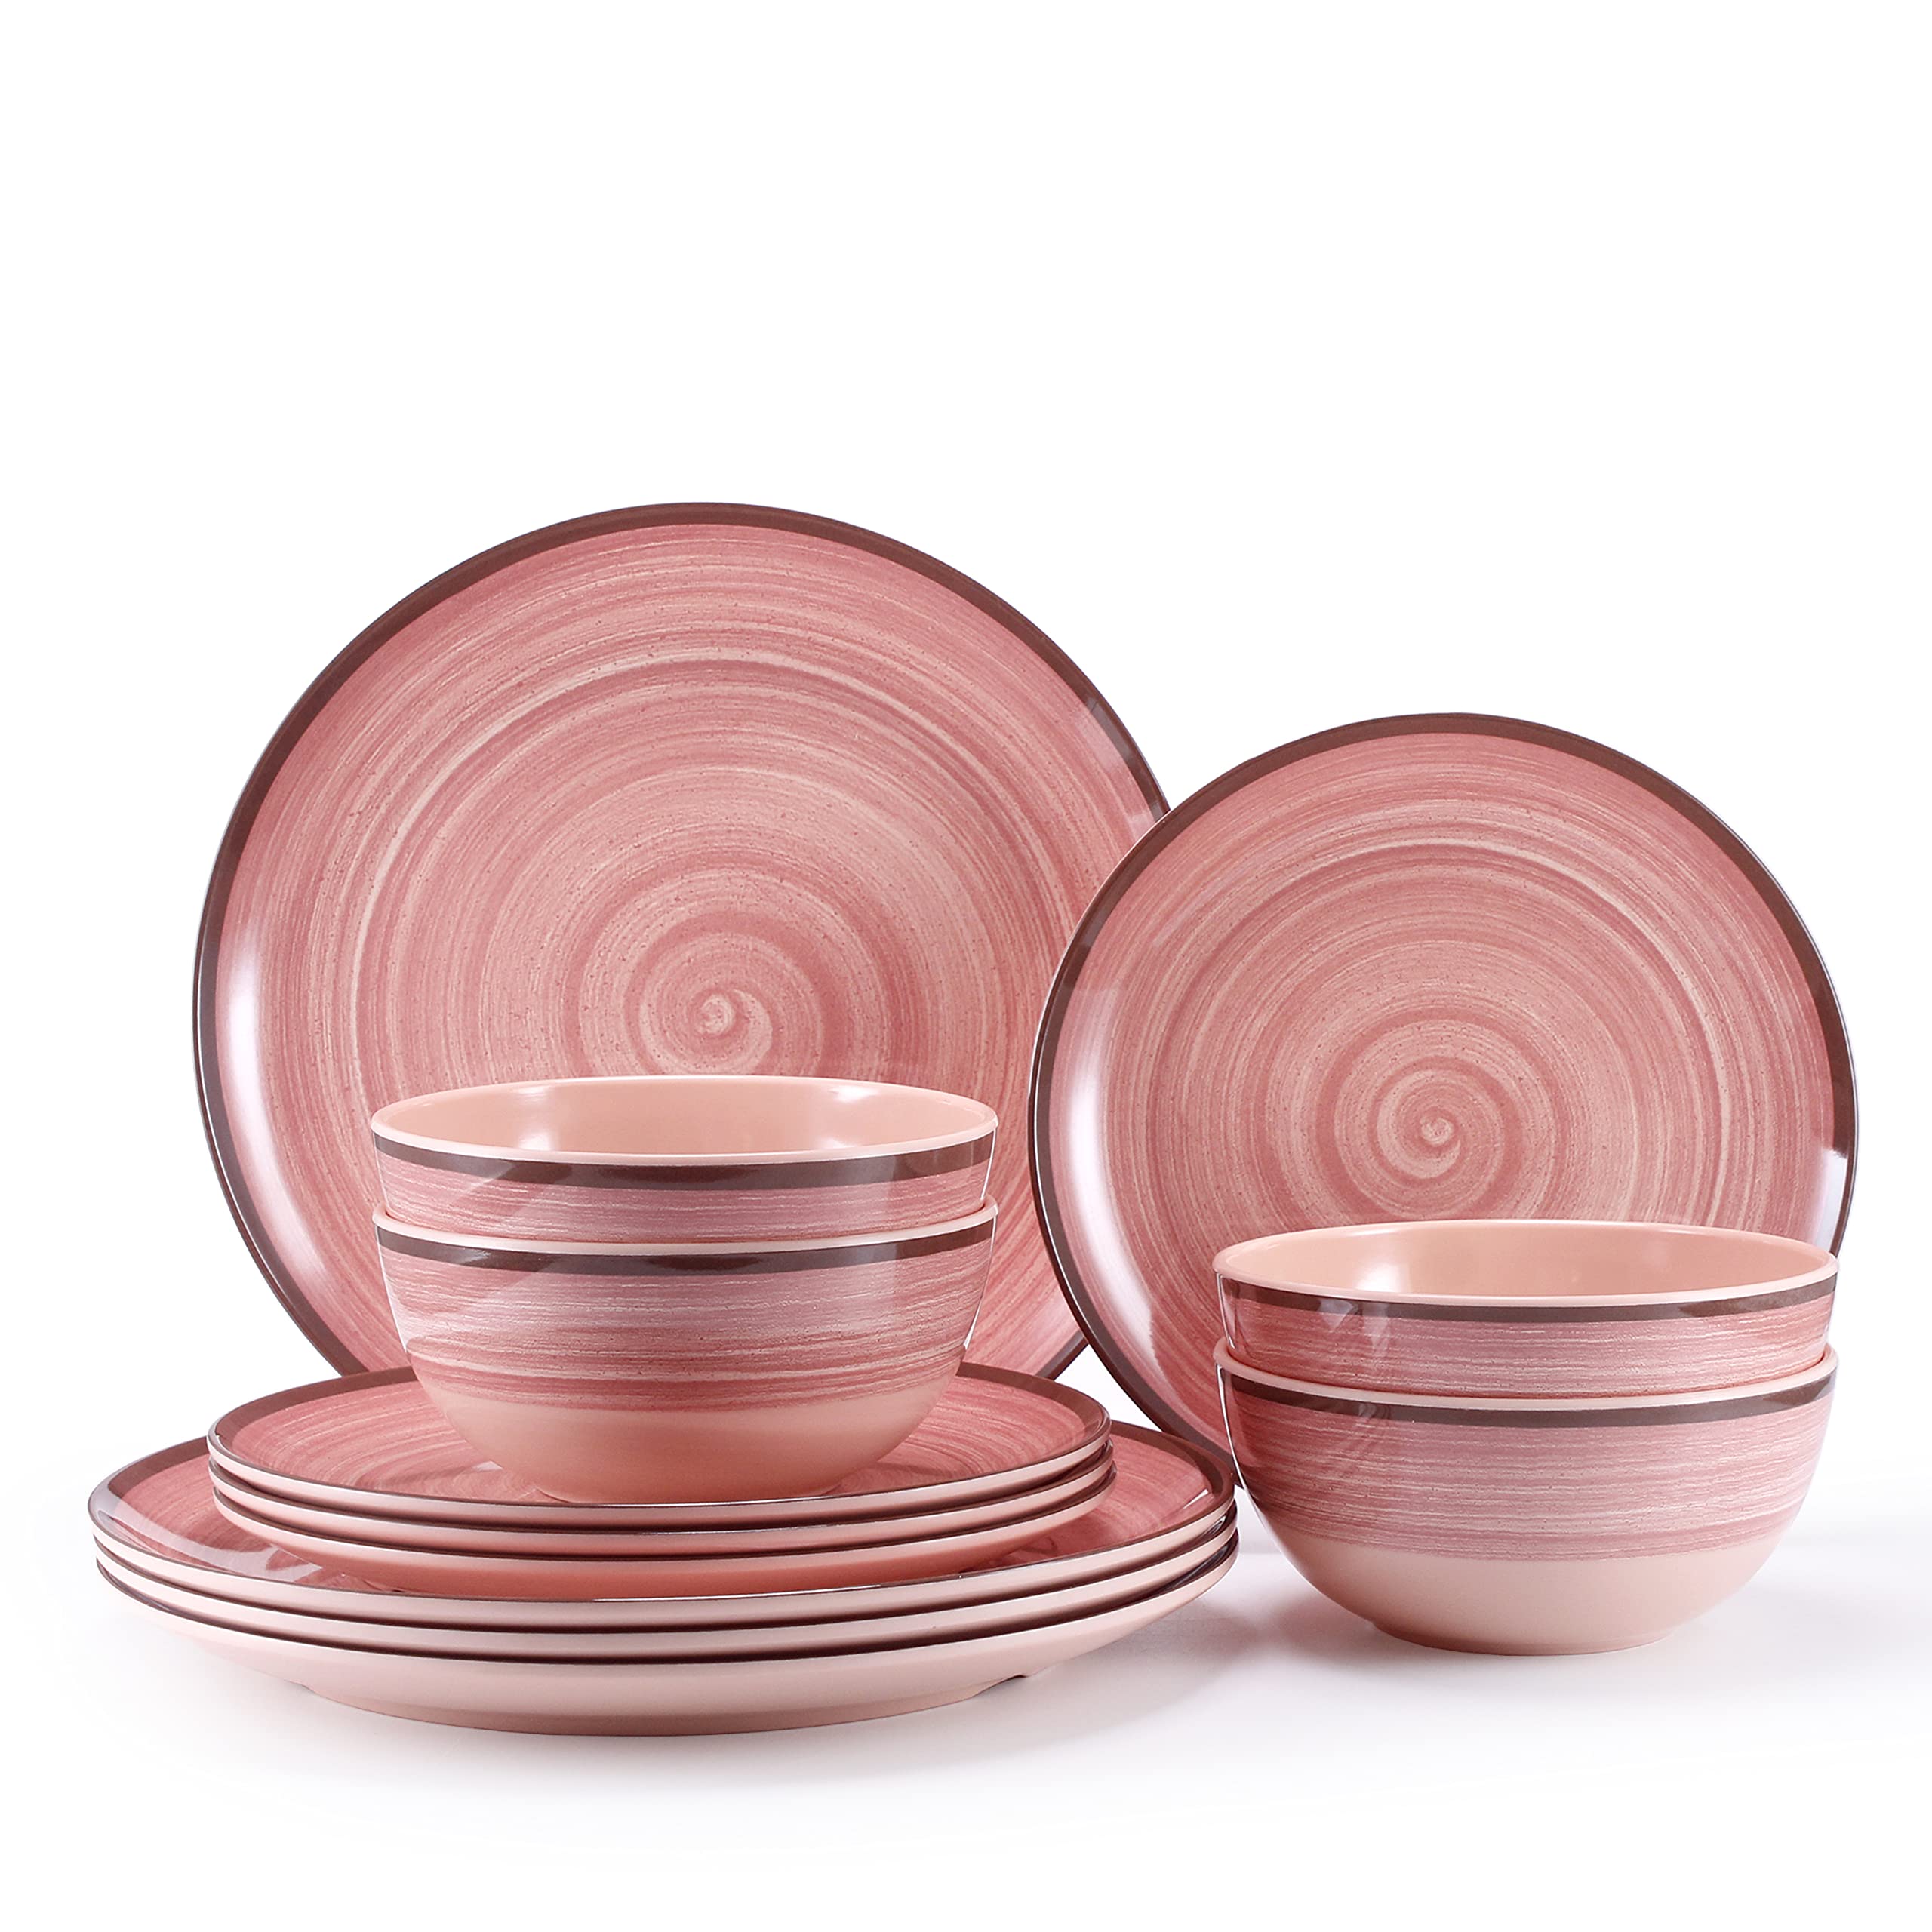 12Pcs Melamine Dinnerware Set, Plates And Bowls Sets for 4, Pink Color Dinnerware Sets, Melamine Plates Bowls Indoor and Outdoor Use Dish Set Dishwasher Safe BPA Free(Pink)